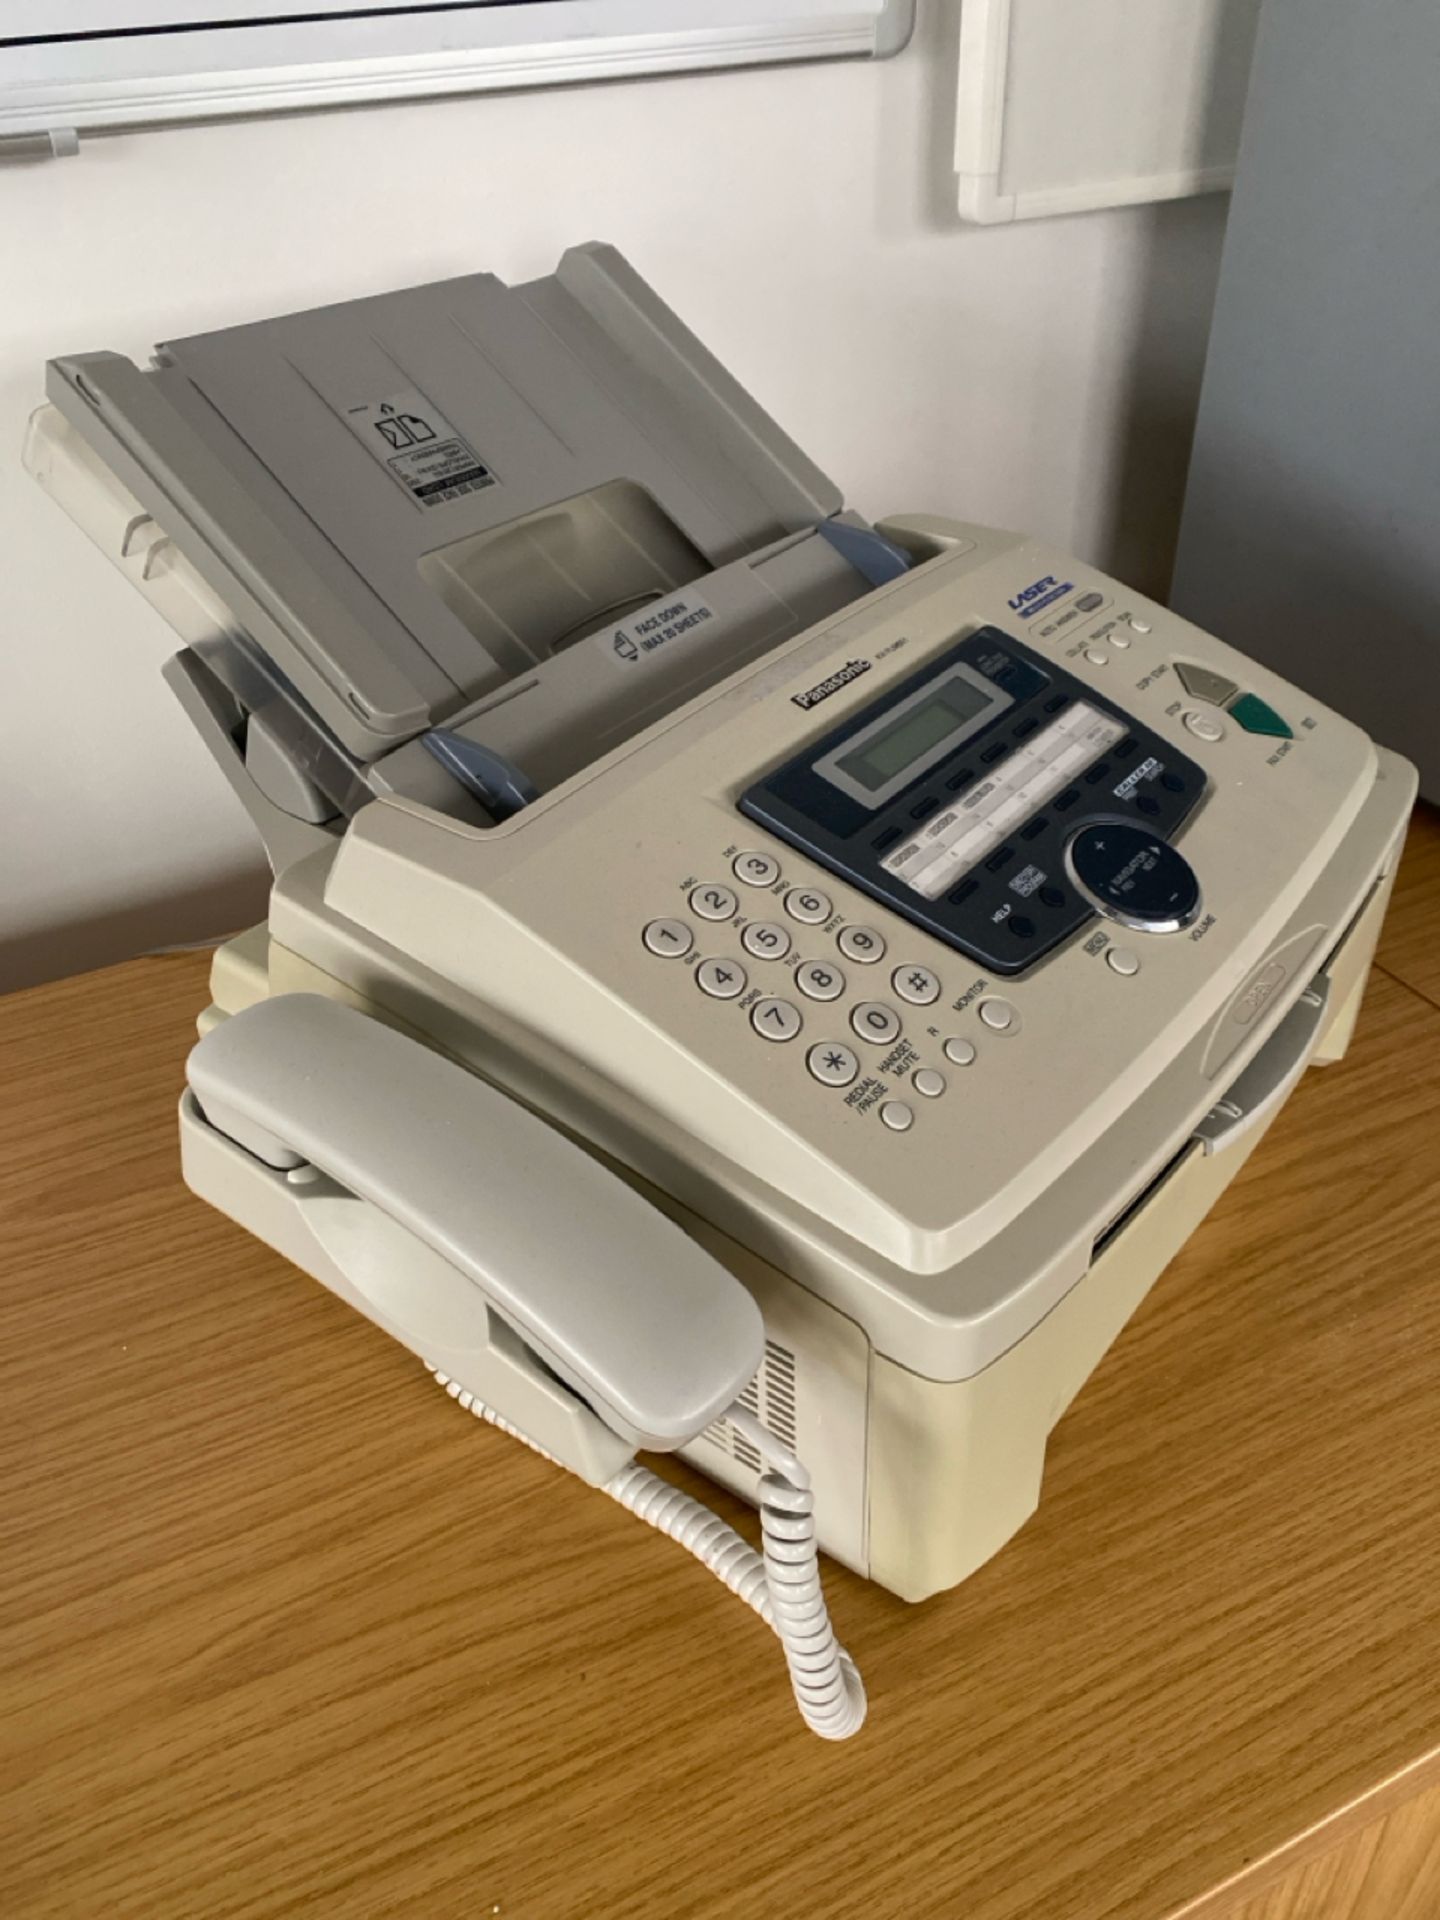 Panasonic KX-FLM651 Fax Machine - Image 5 of 5